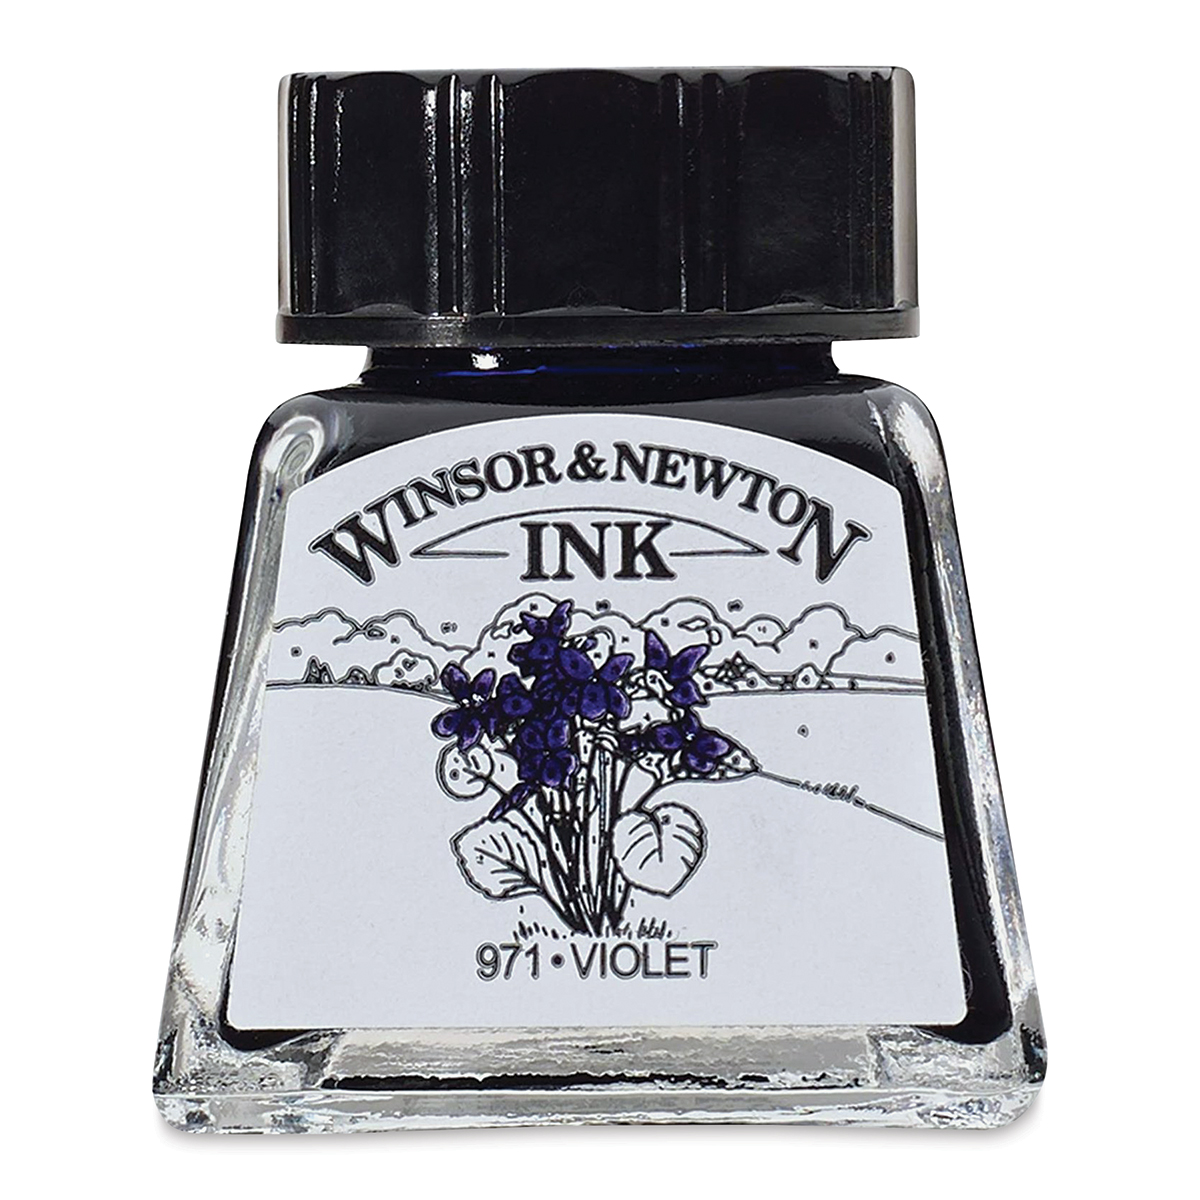 Winsor & Newton Drawing Ink - 30 mL, Liquid Indian